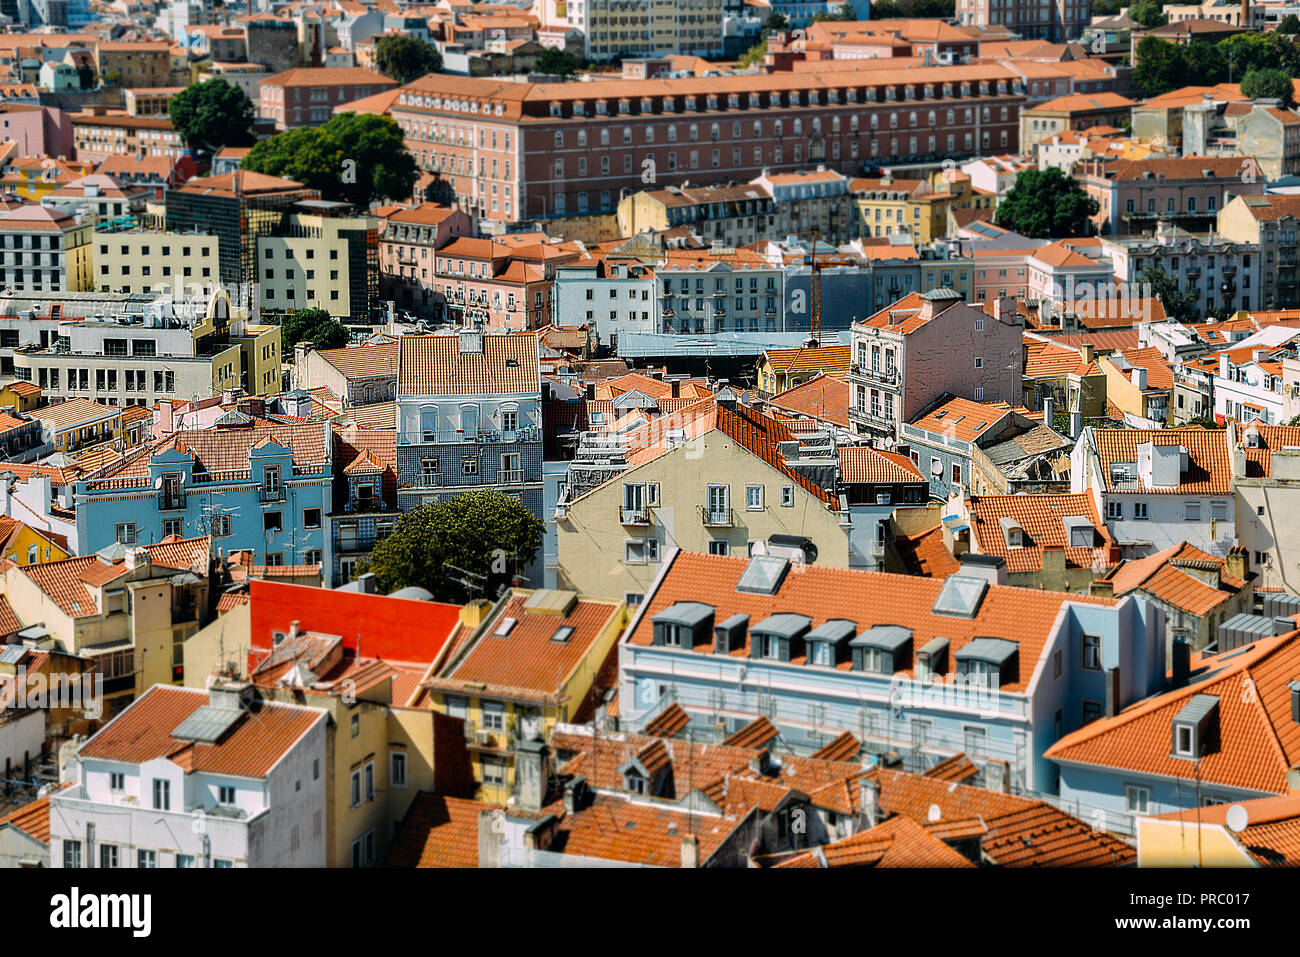 Views of terracotta rooftops of Lisbon, Portugal - tilt shift effect Stock Photo